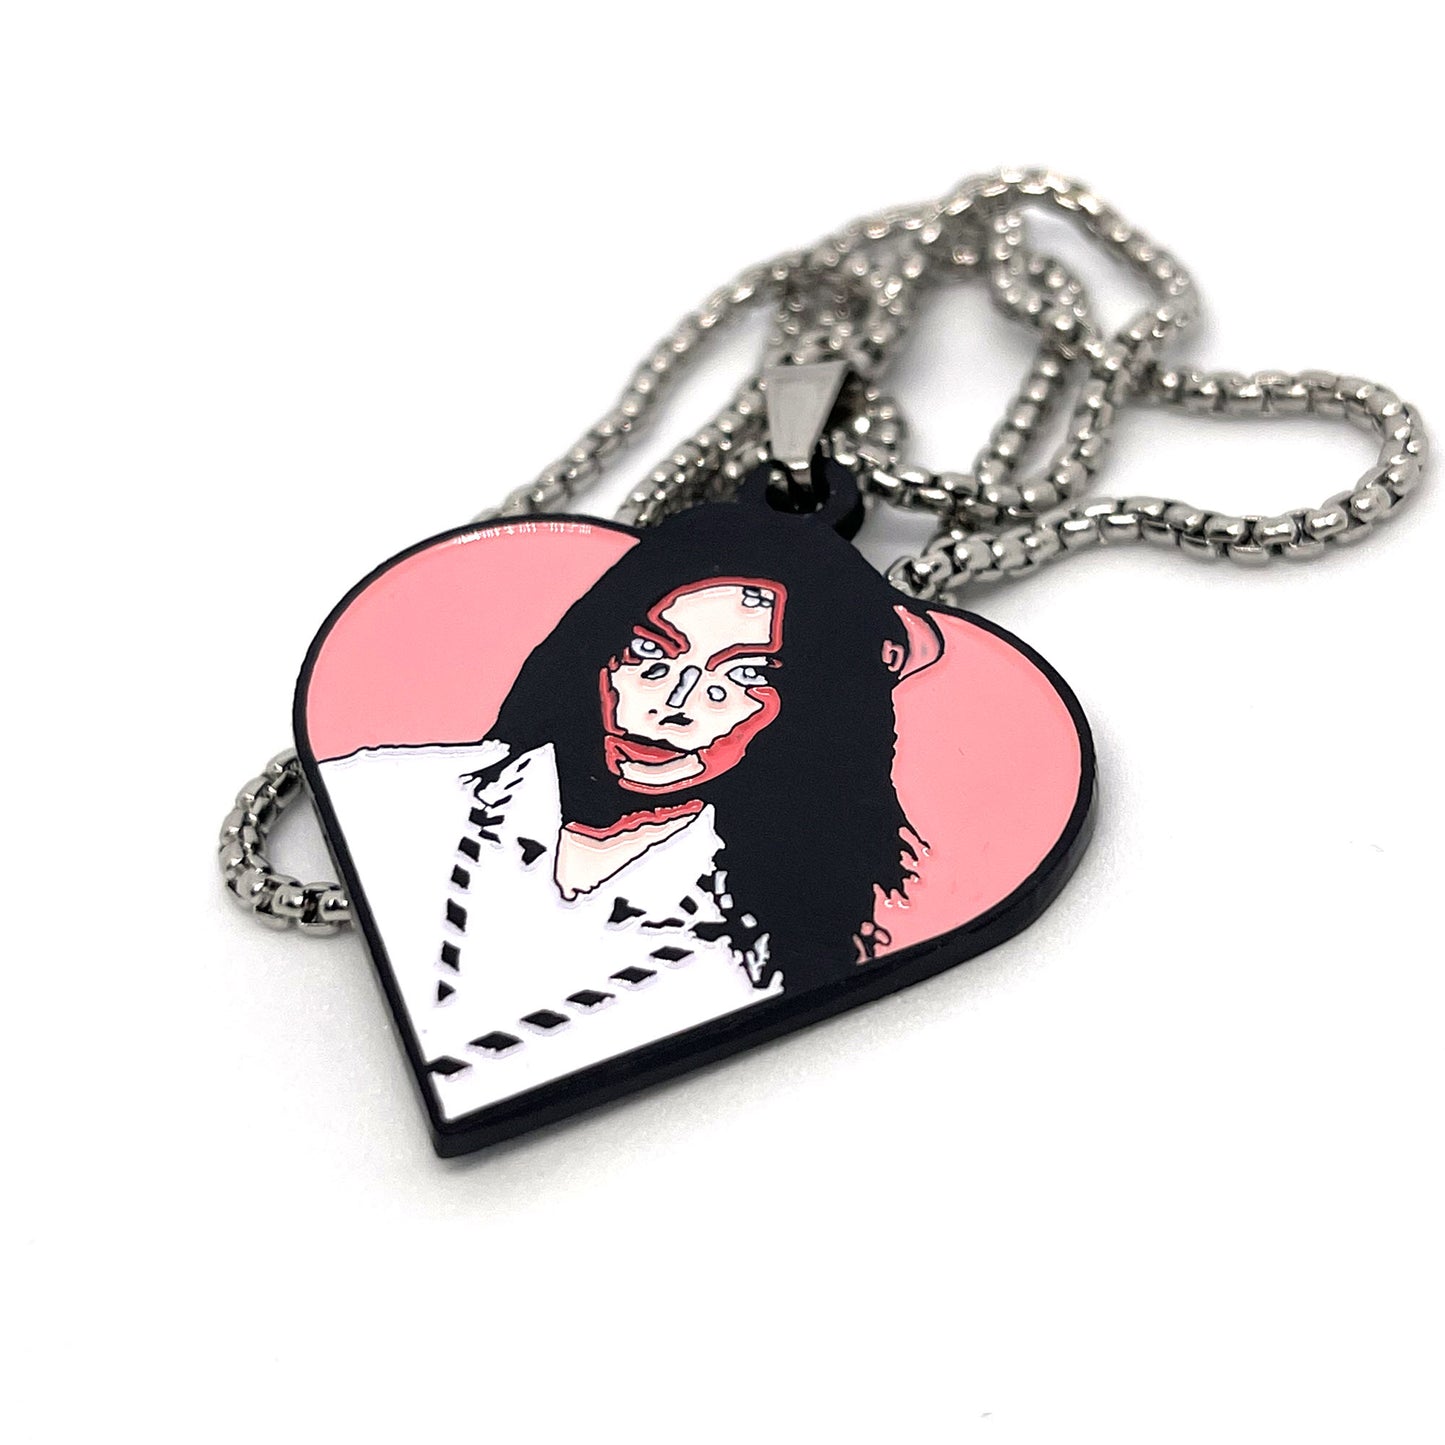 Björk "Post" Heart Fan-Made Enamel Pendant Chain Necklace – 60cm Stainless Steel Chain